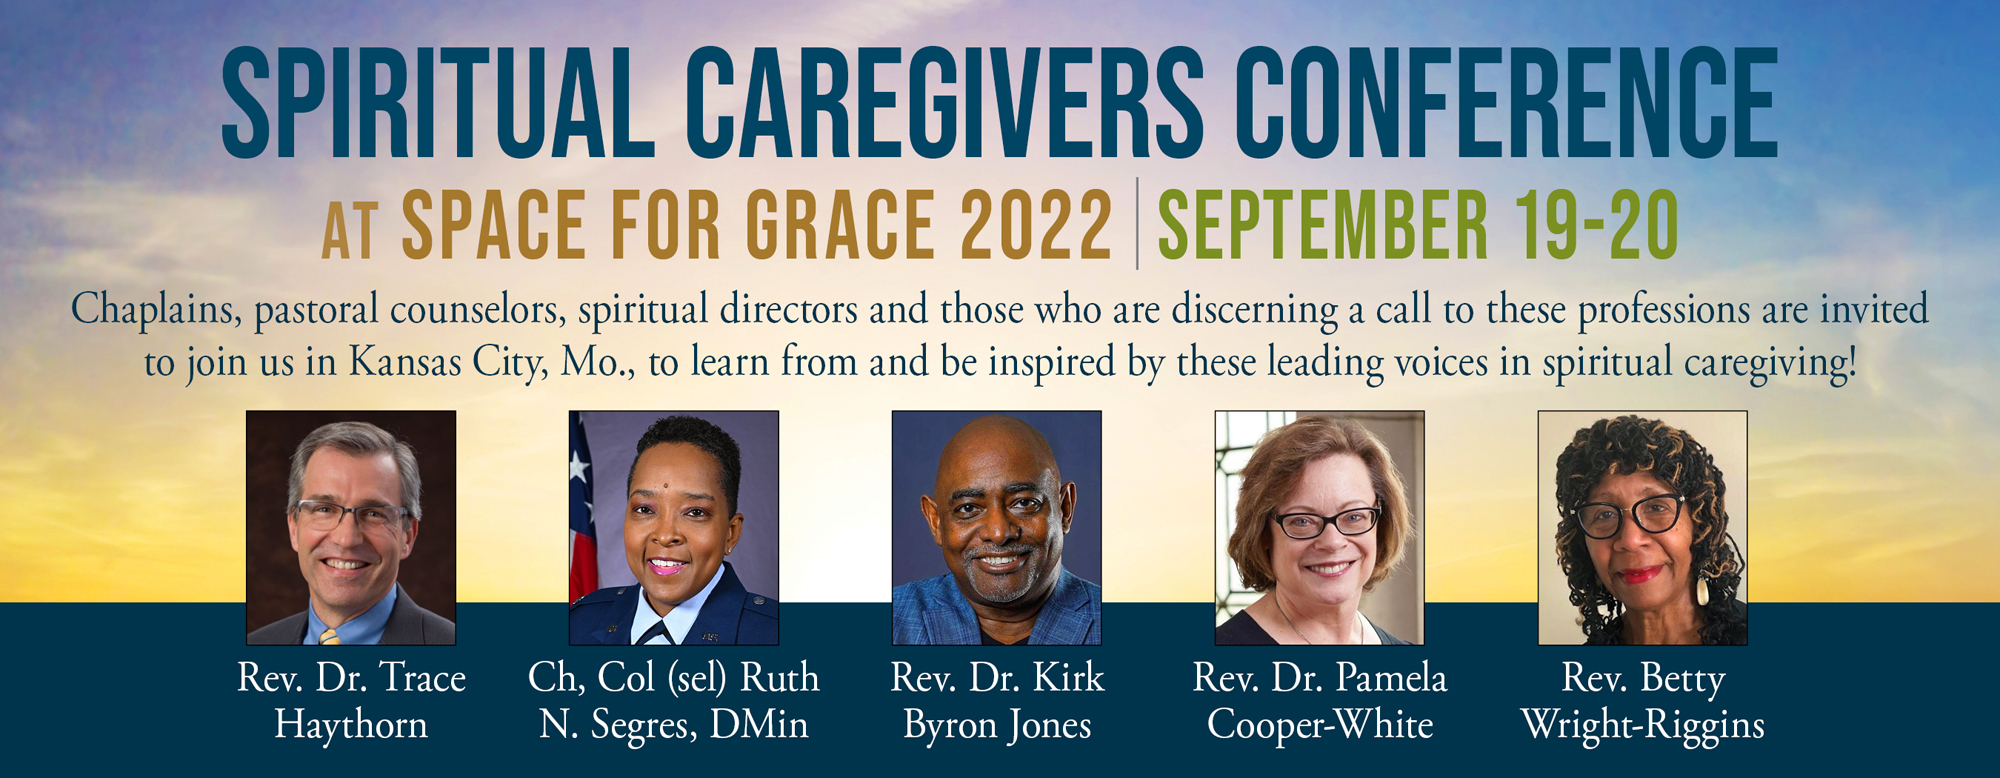 Spiritual Caregivers Conference banner